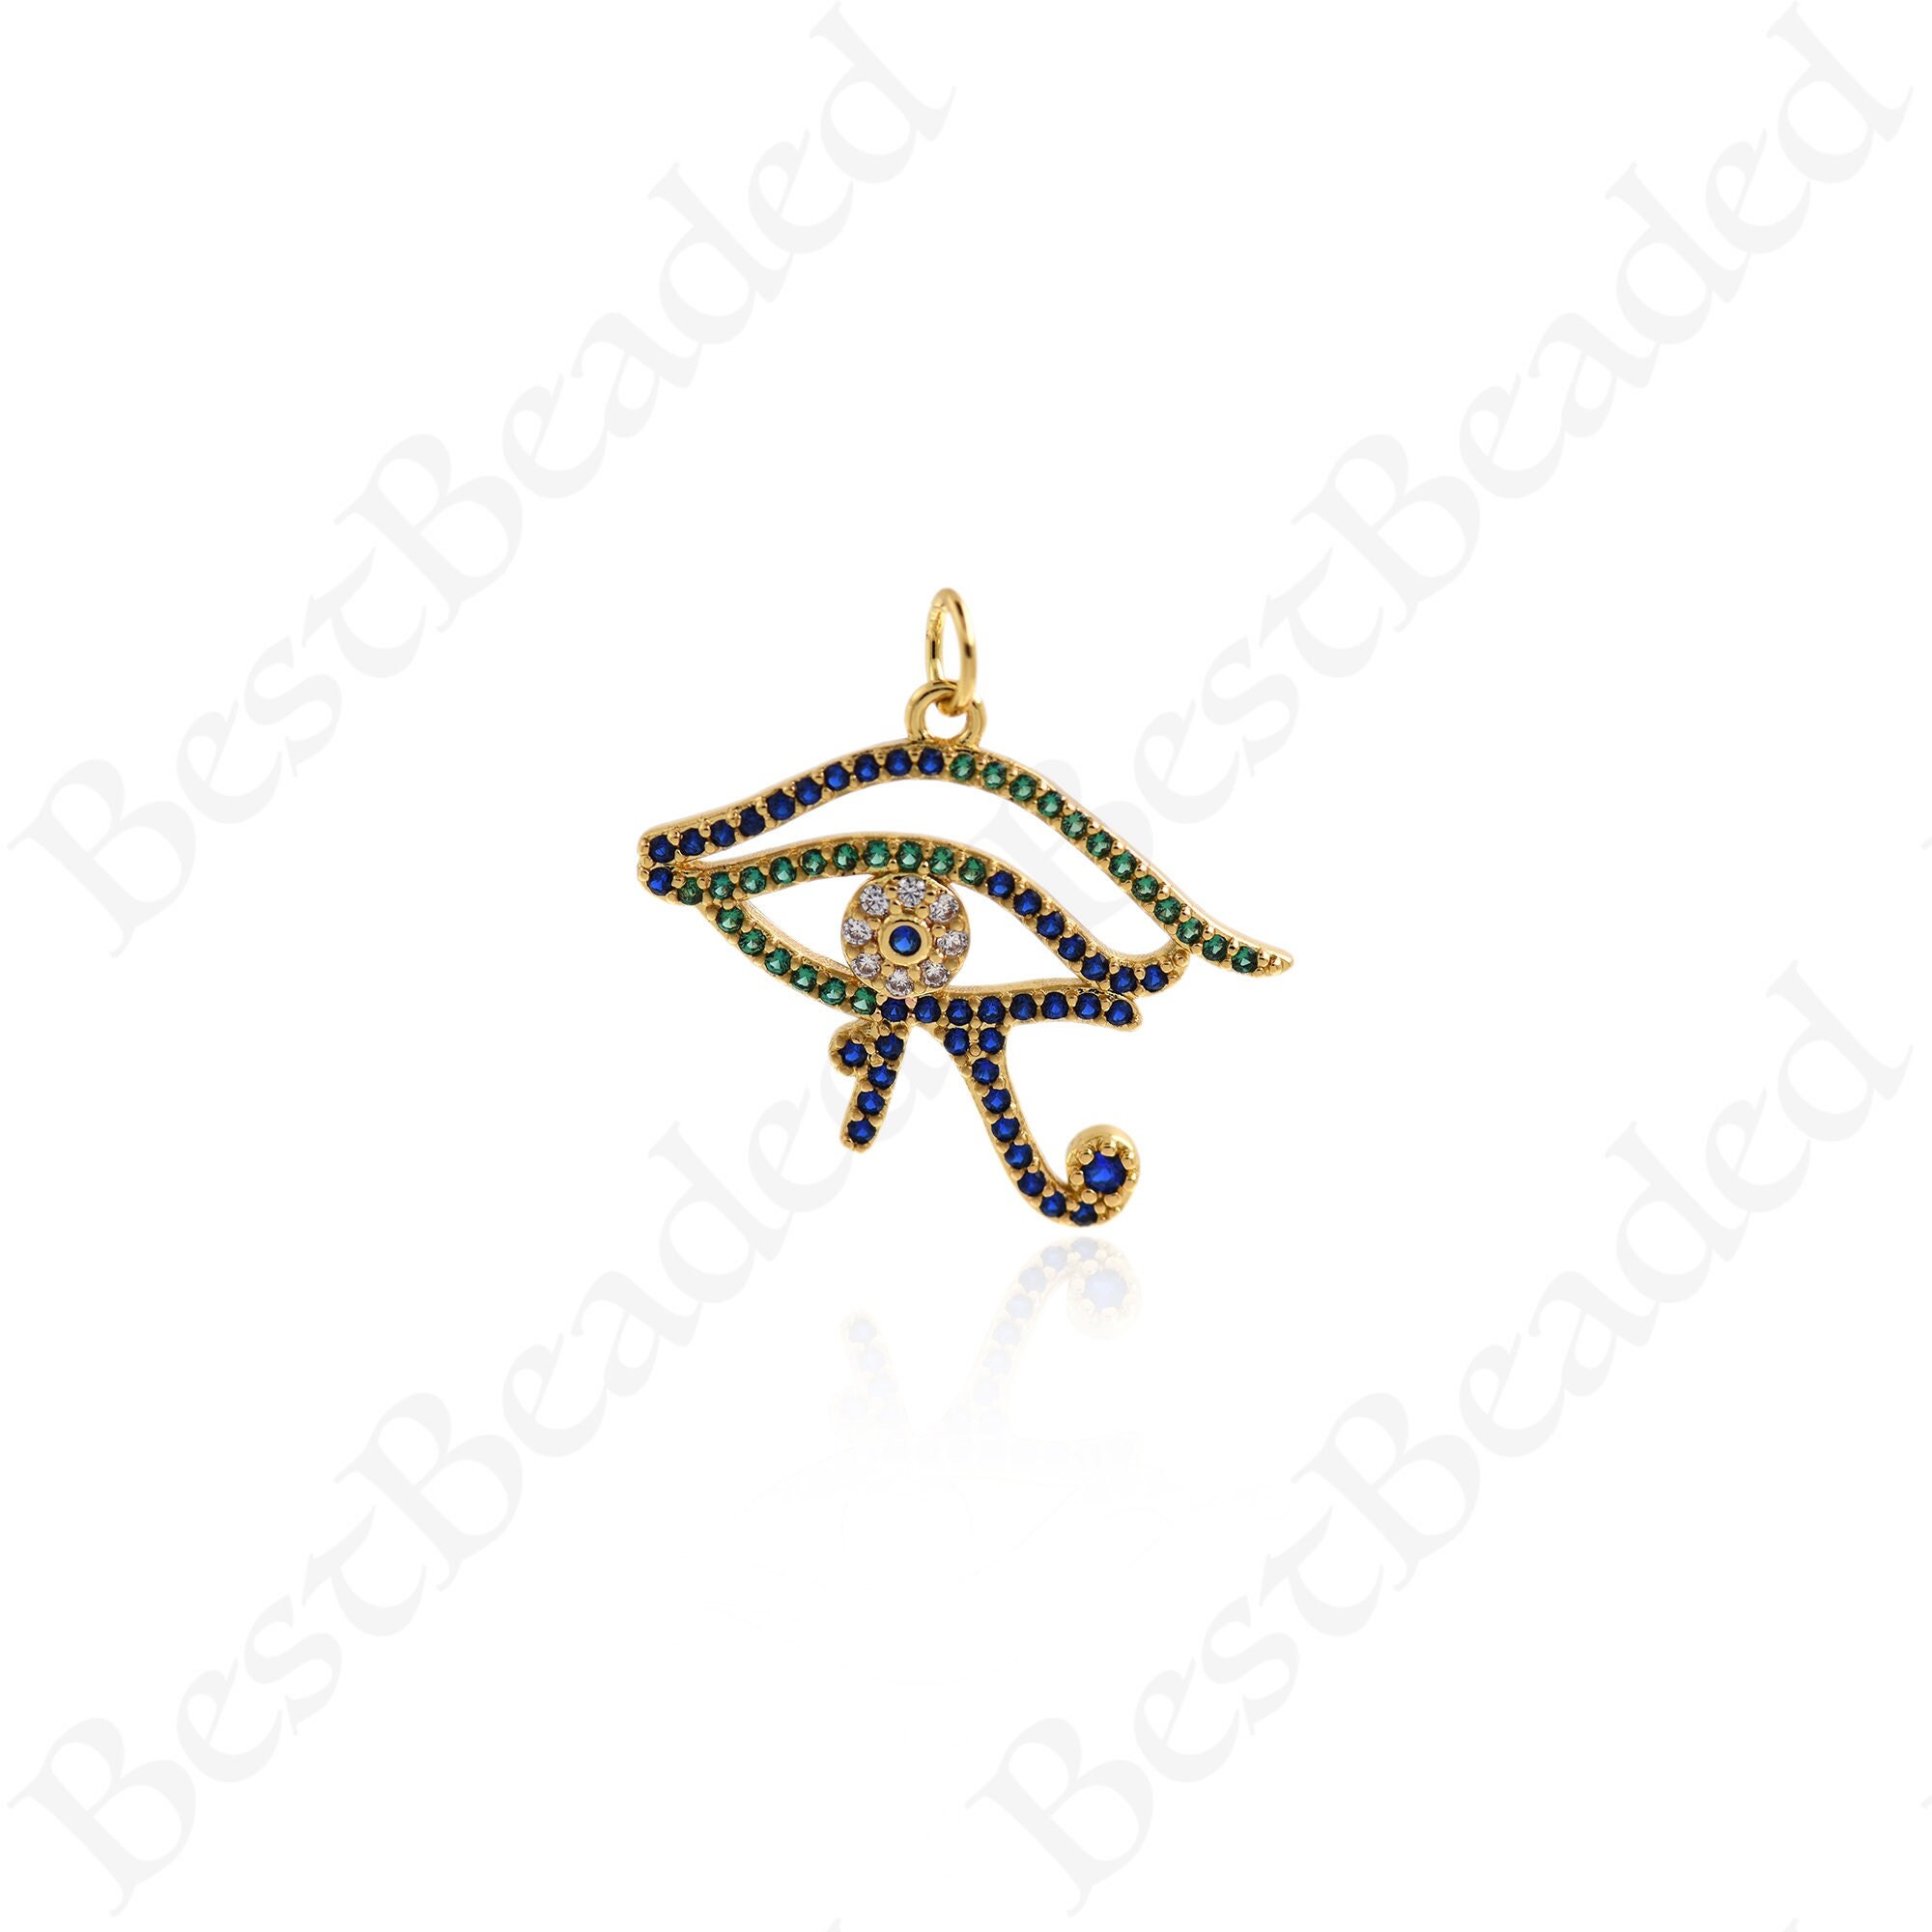 SALE Antique Bronze Brass Eye of Horus Eye of Ra Keychain for 